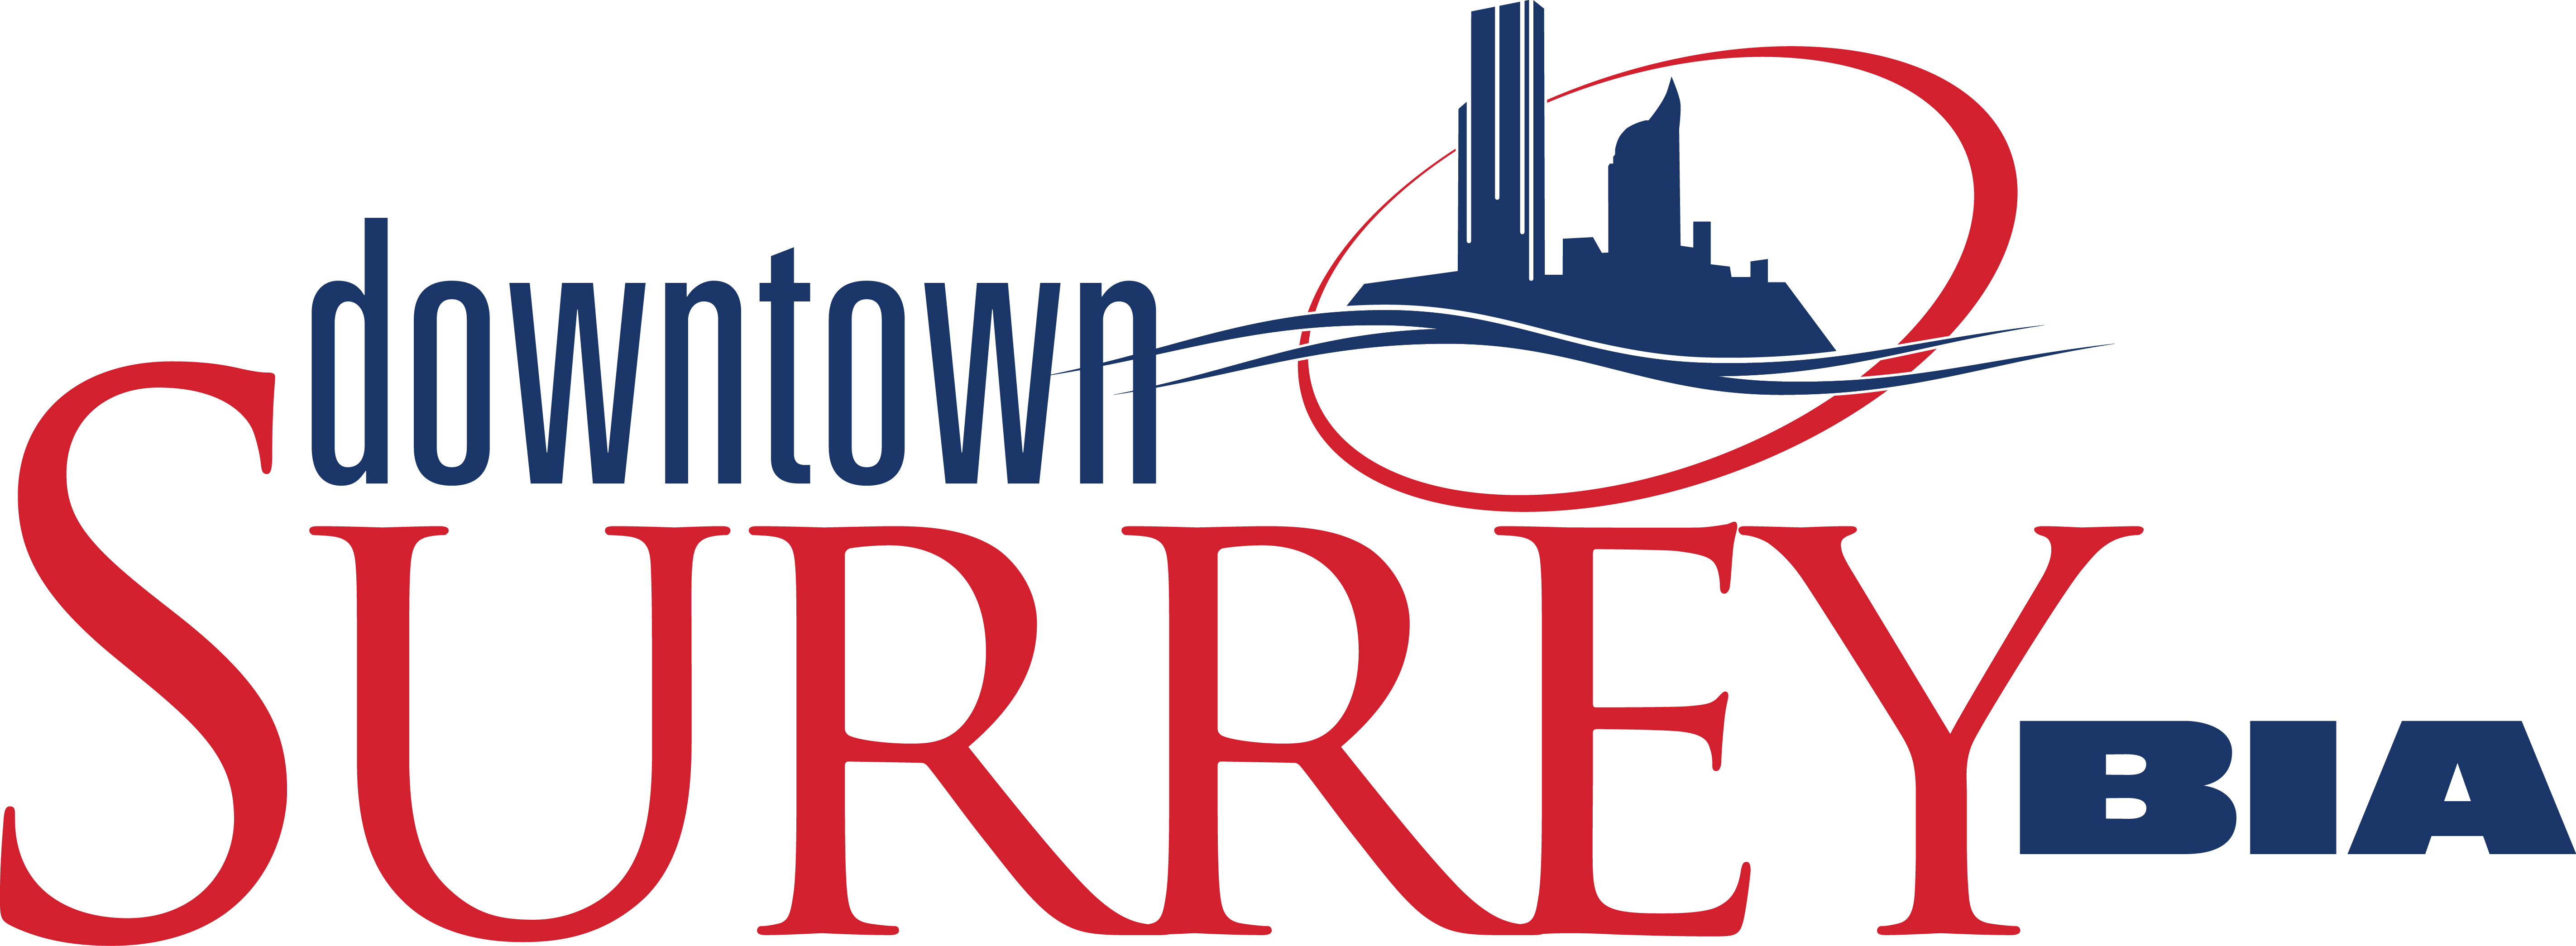 Bia Logo - Downtown Surrey Business Improvement Association